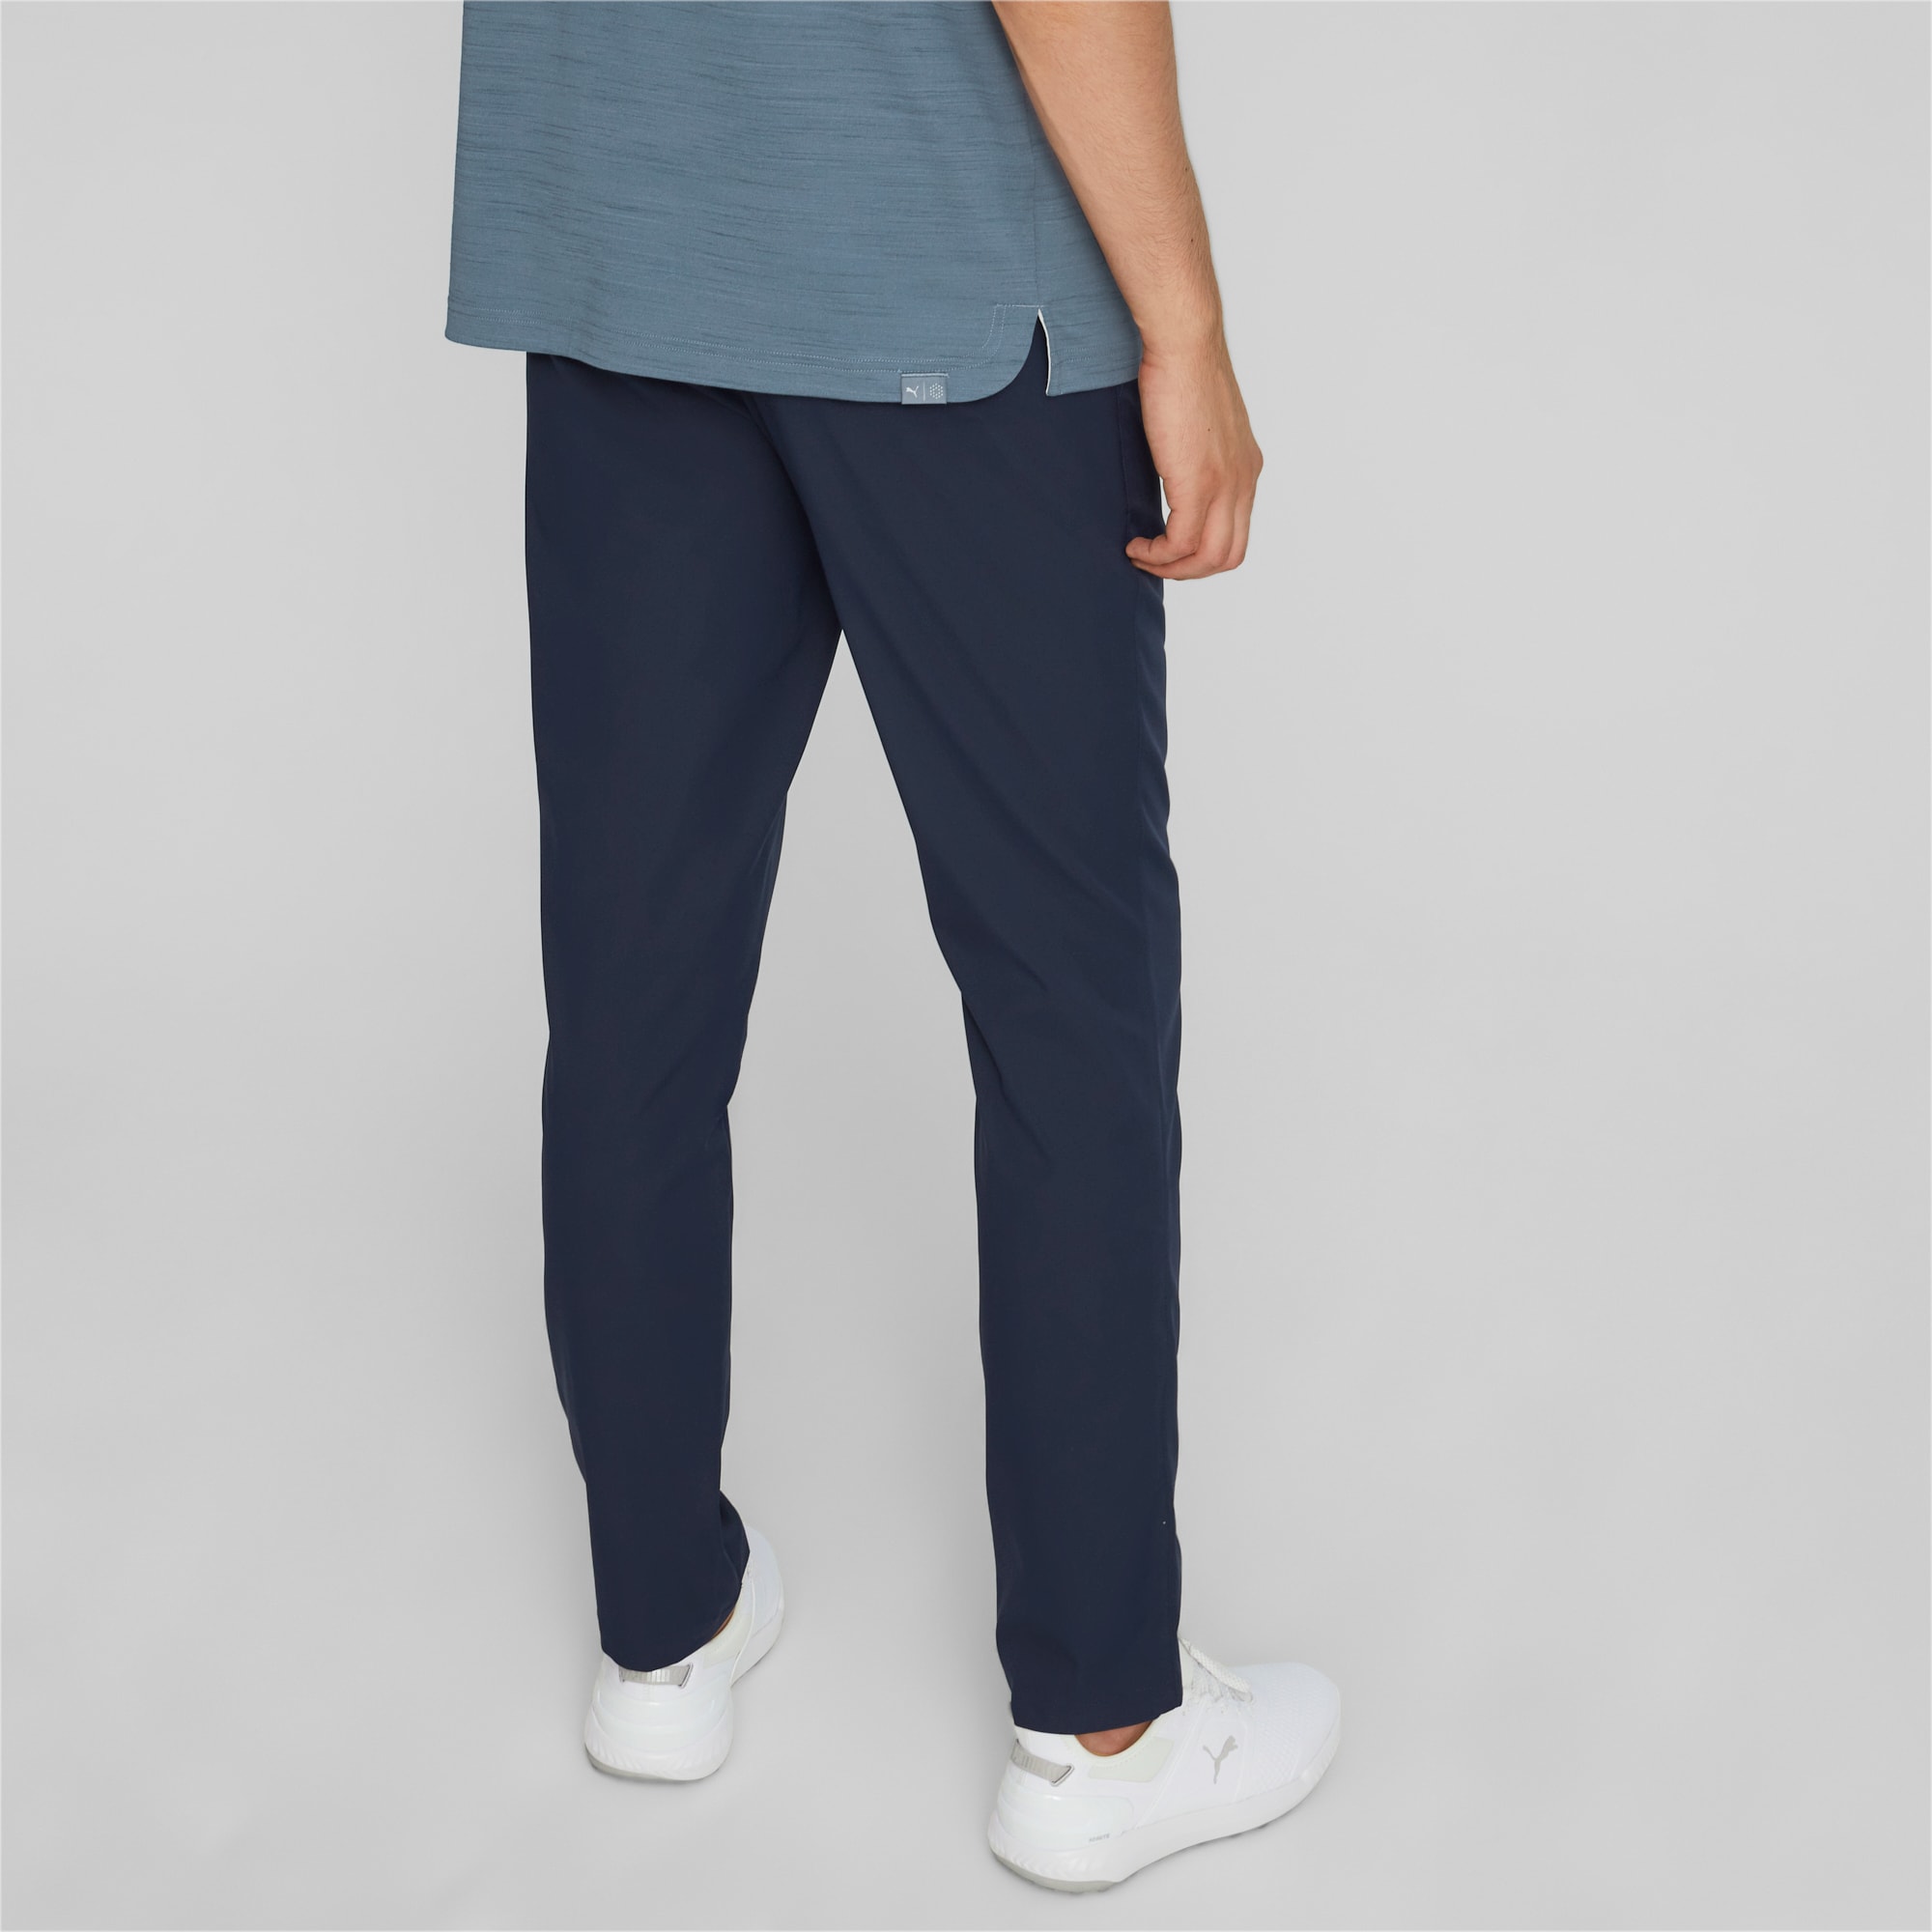 PUMA Dealer Tailored Golf Pants Men, Dark Blue, Size 35/30, Clothing